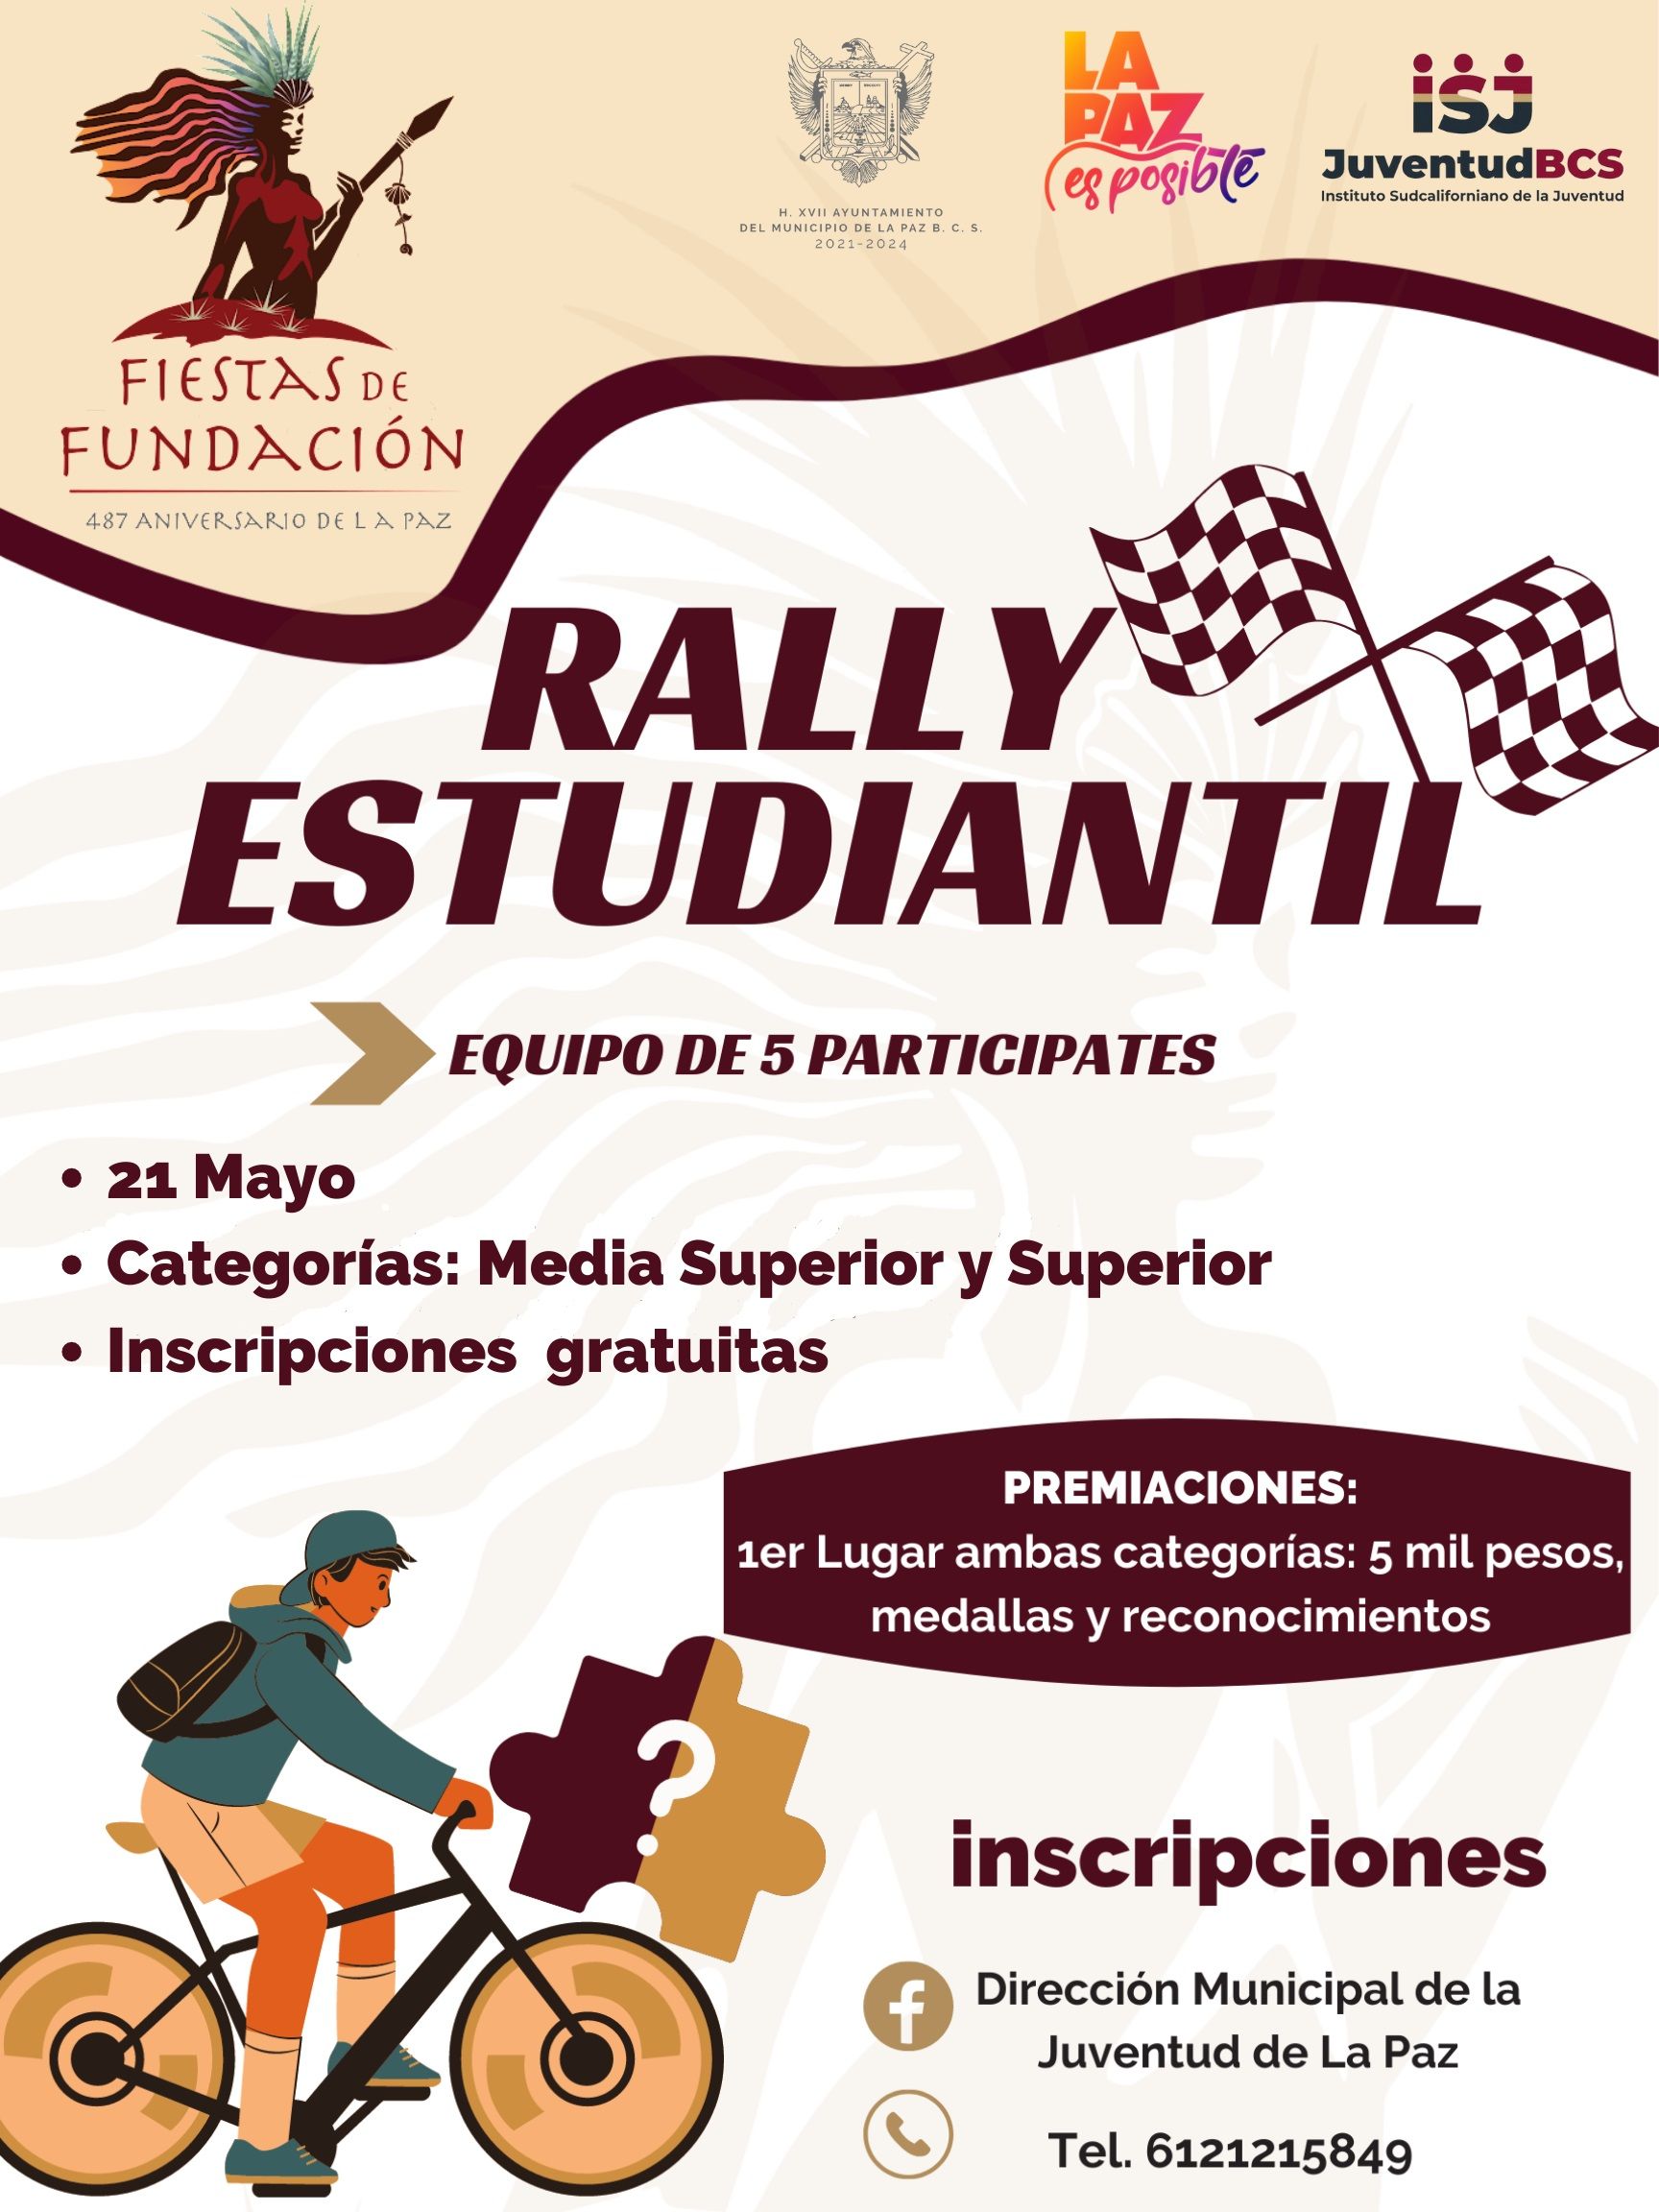 Convocan a participar en el “Rally Estudiantil” en La Paz